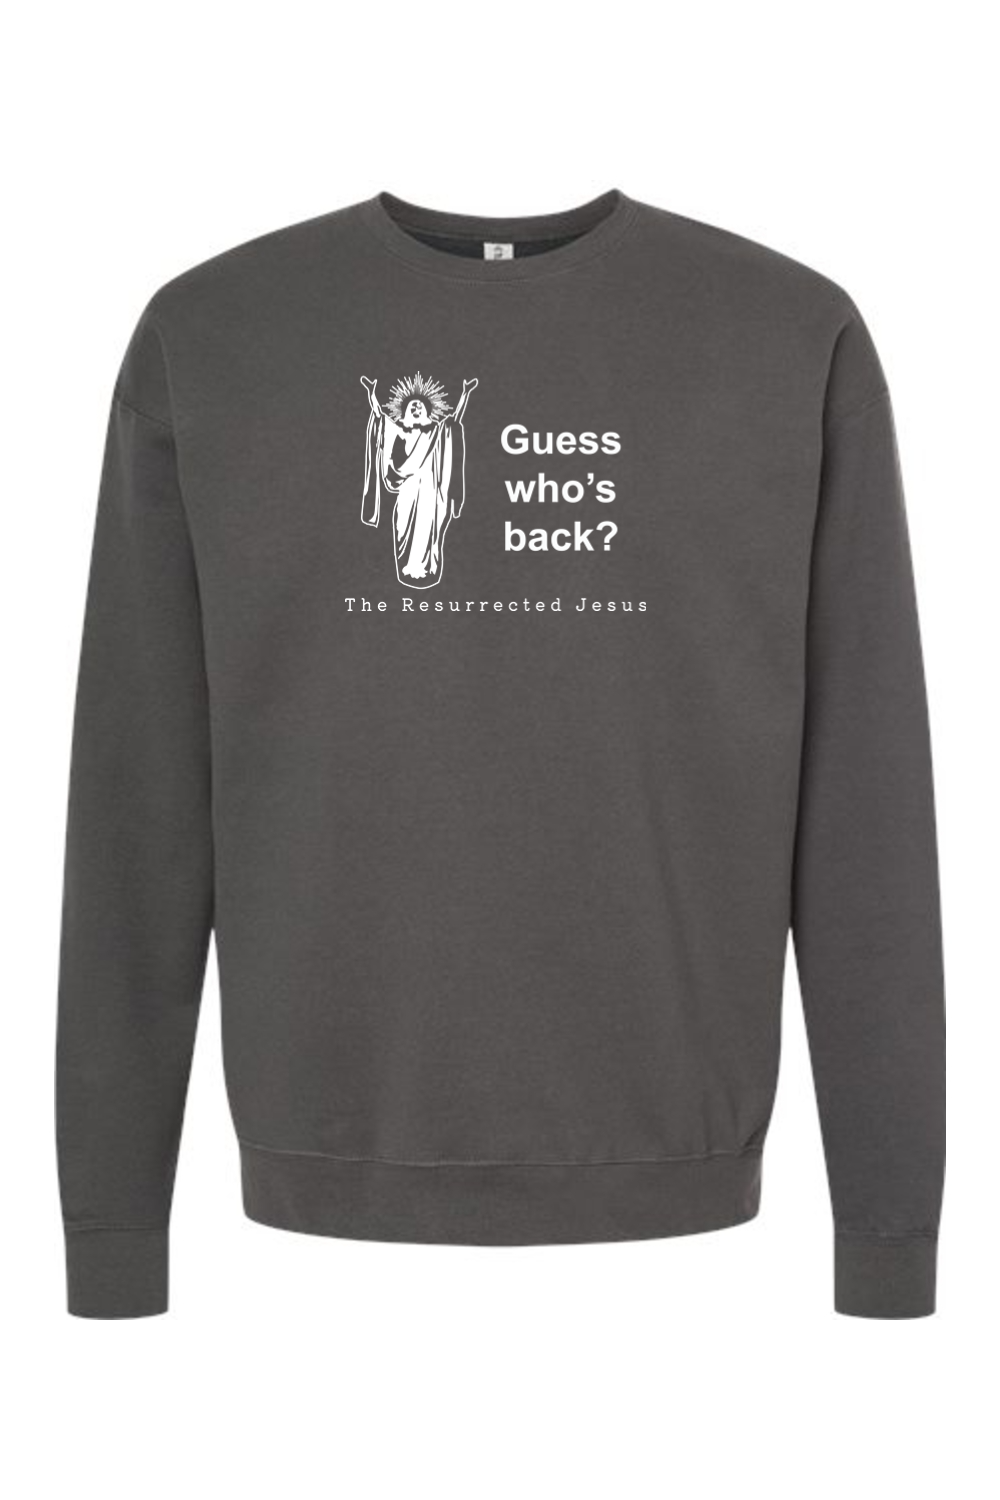 Guess Who's Back - Easter Crewneck Sweatshirt